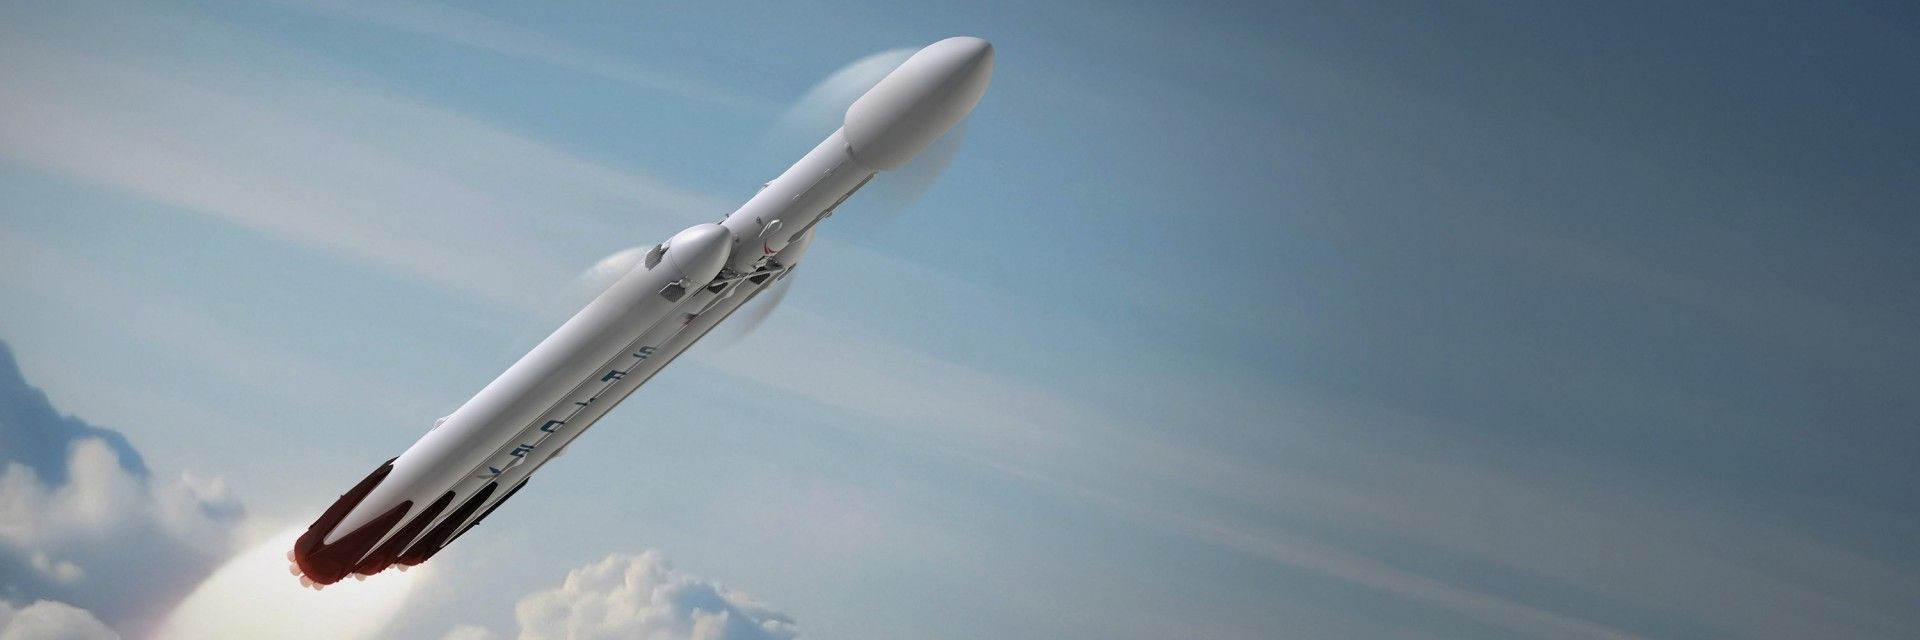 Rakieta Falcon Heavy, ilustracja: SpaceX